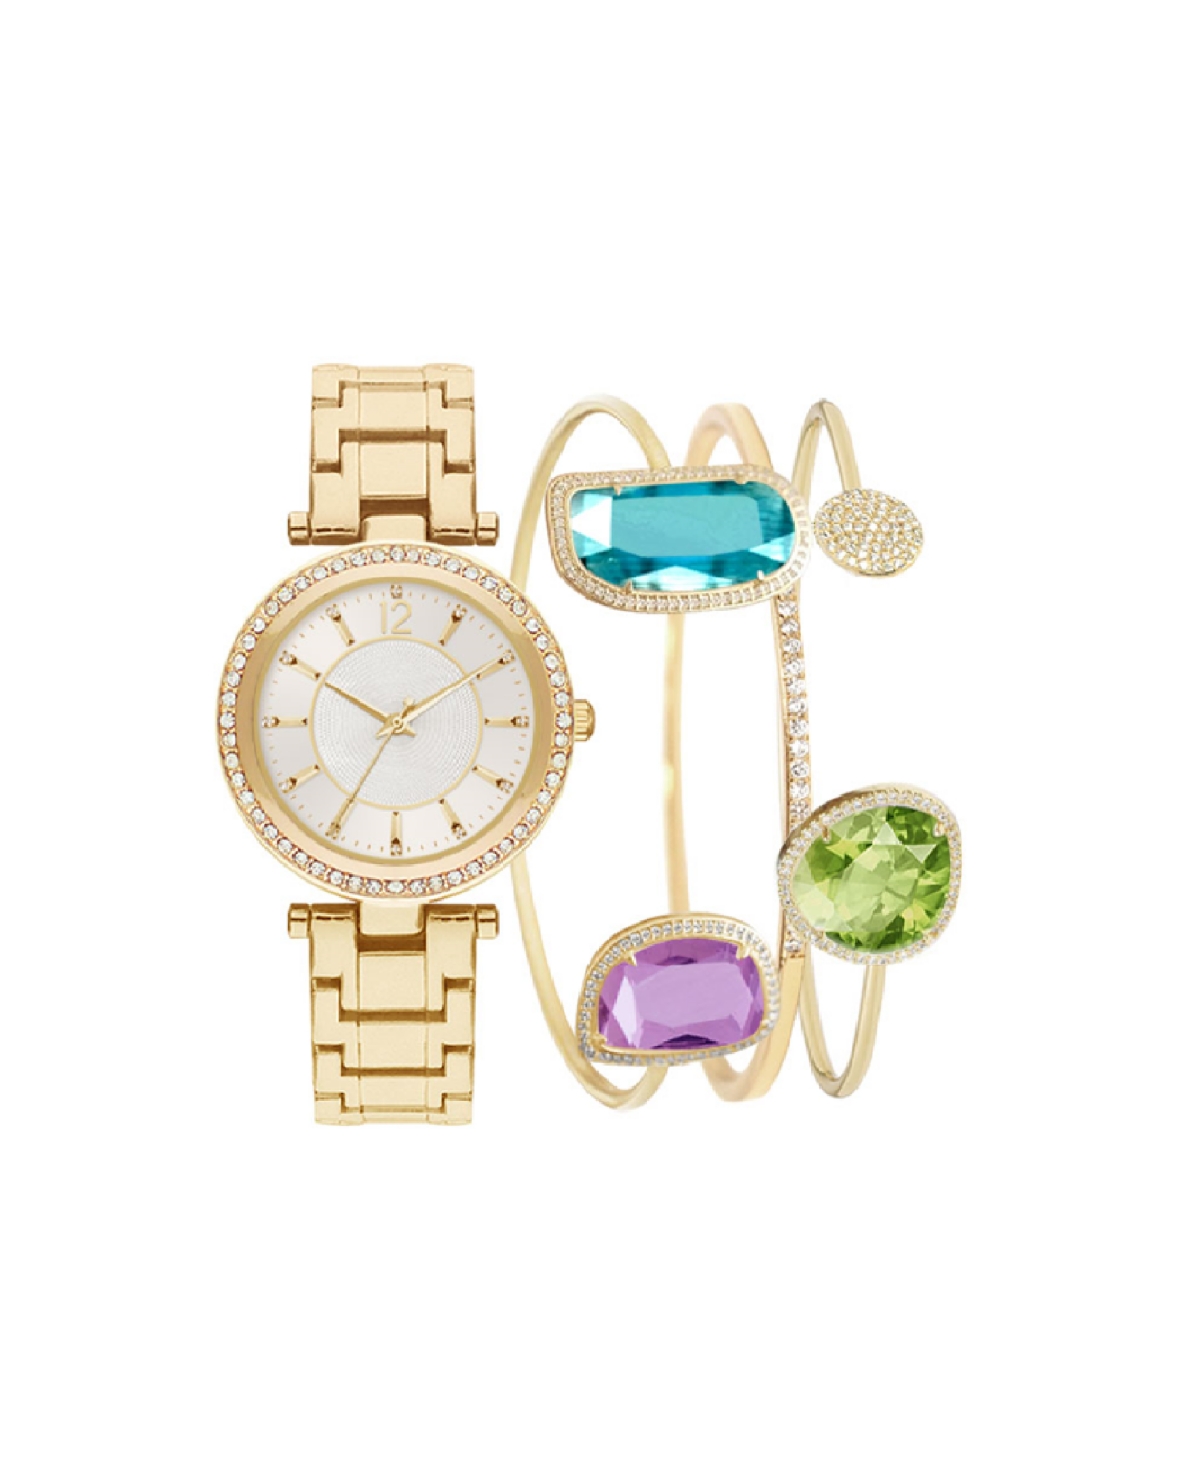 Jessica Carlyle Women's Quartz Gold-tone Watch 32mm Gift Set, 4 Pieces